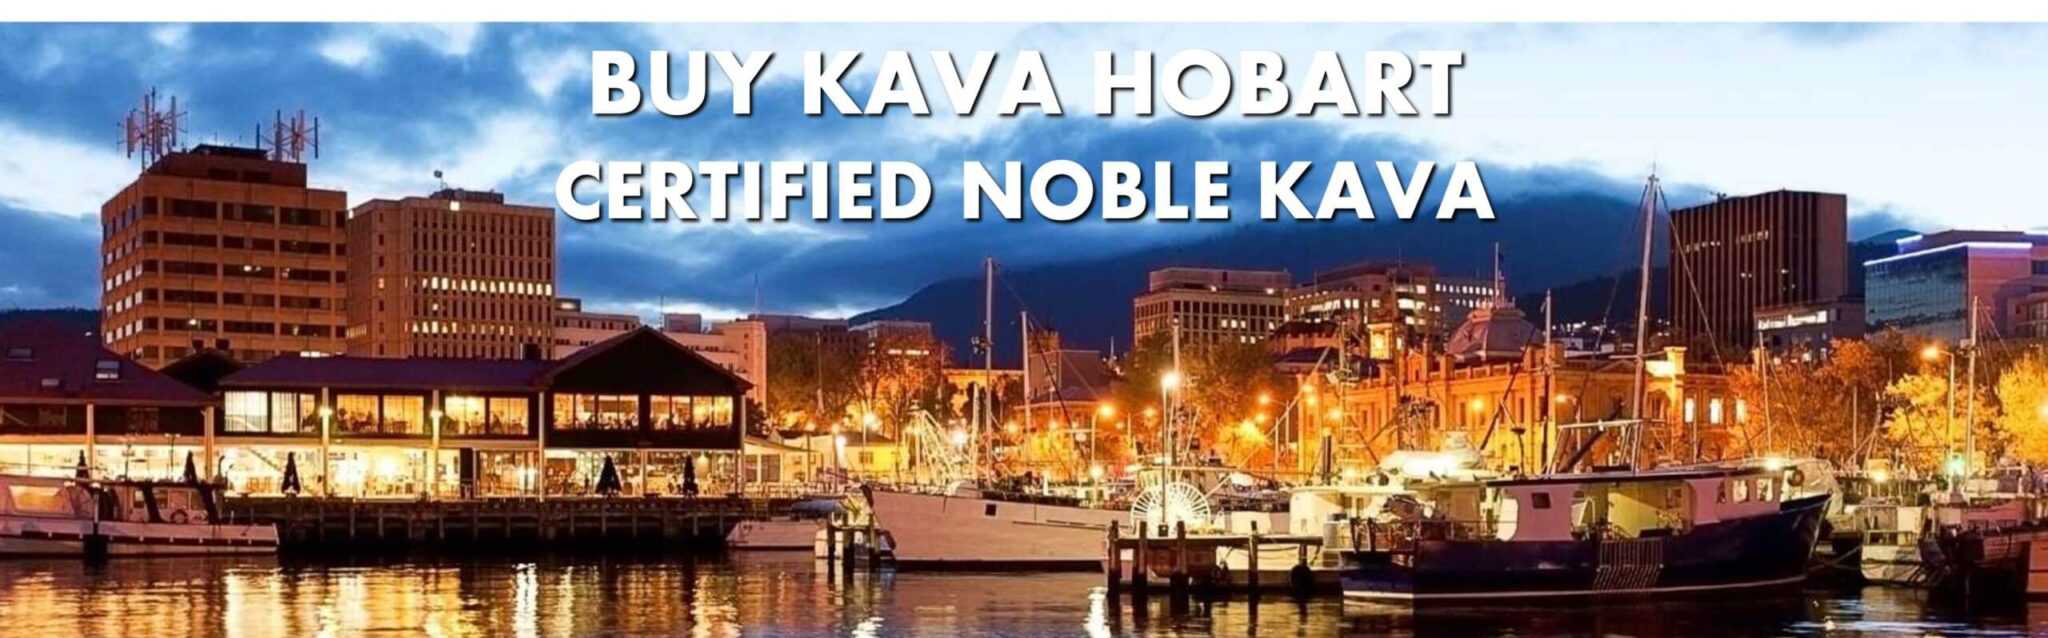 Buy-Kava-Hobart, Waterfront night scene in Hobart Tasmania with caption Buy Kava Hobart Certified Noble Kava